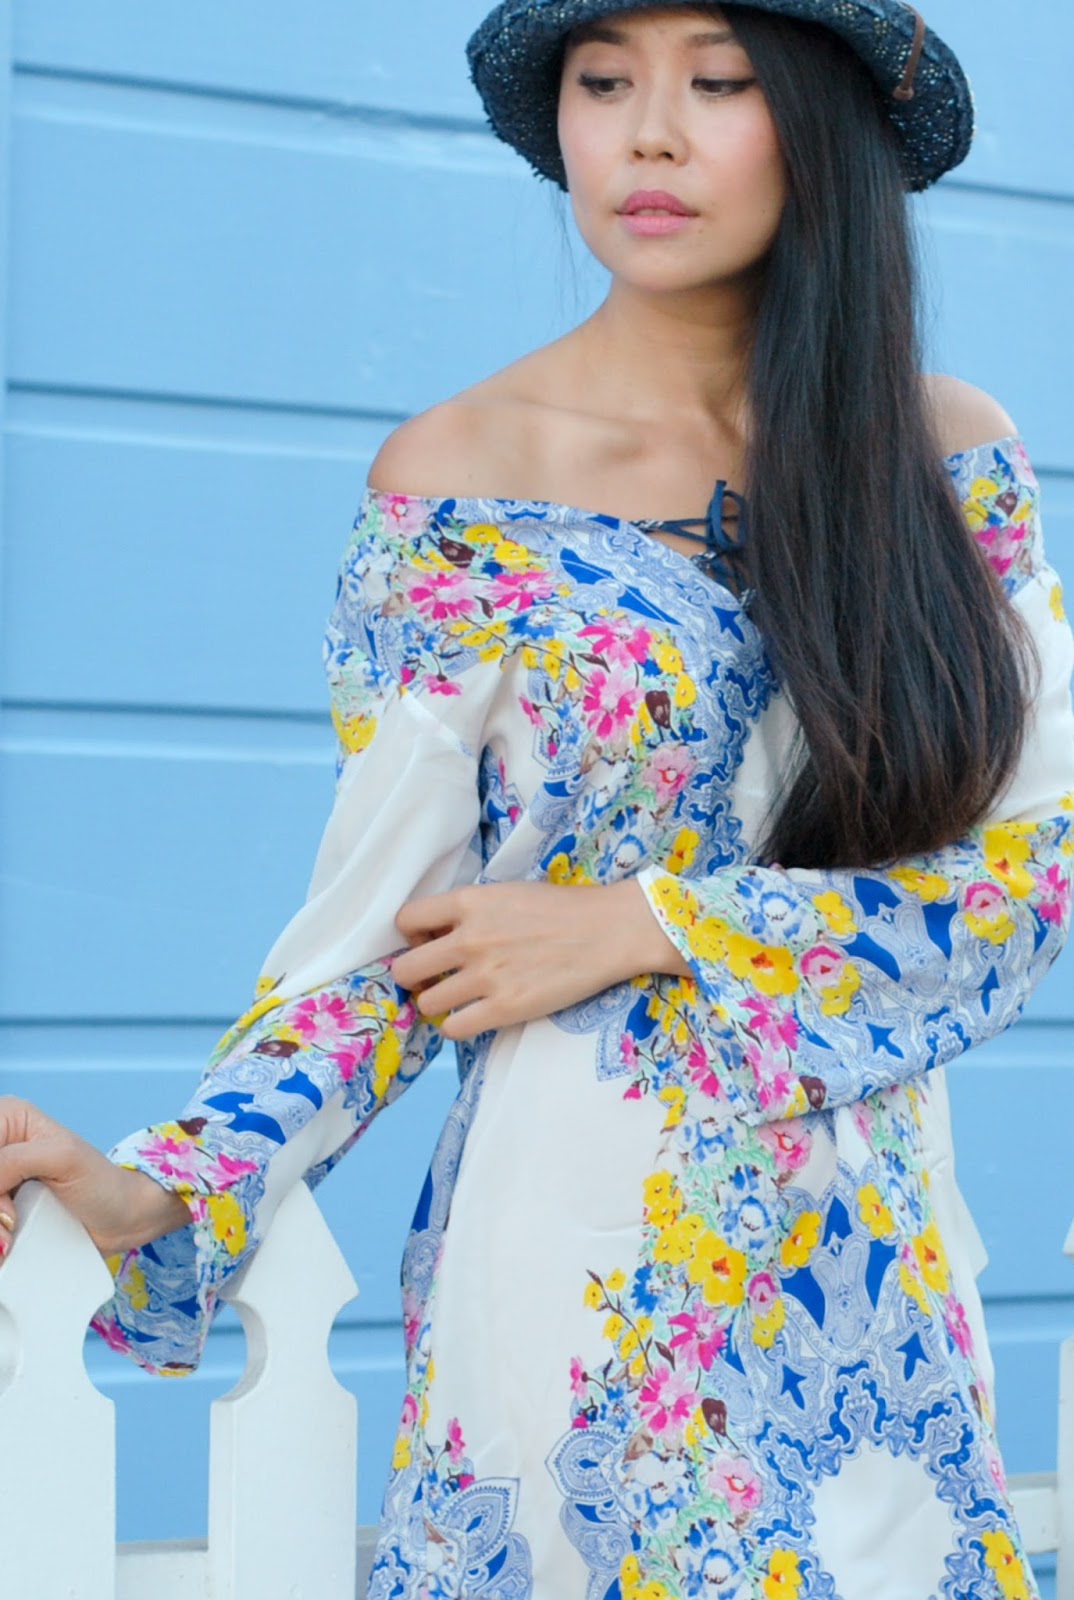 Asian American fashion blogger